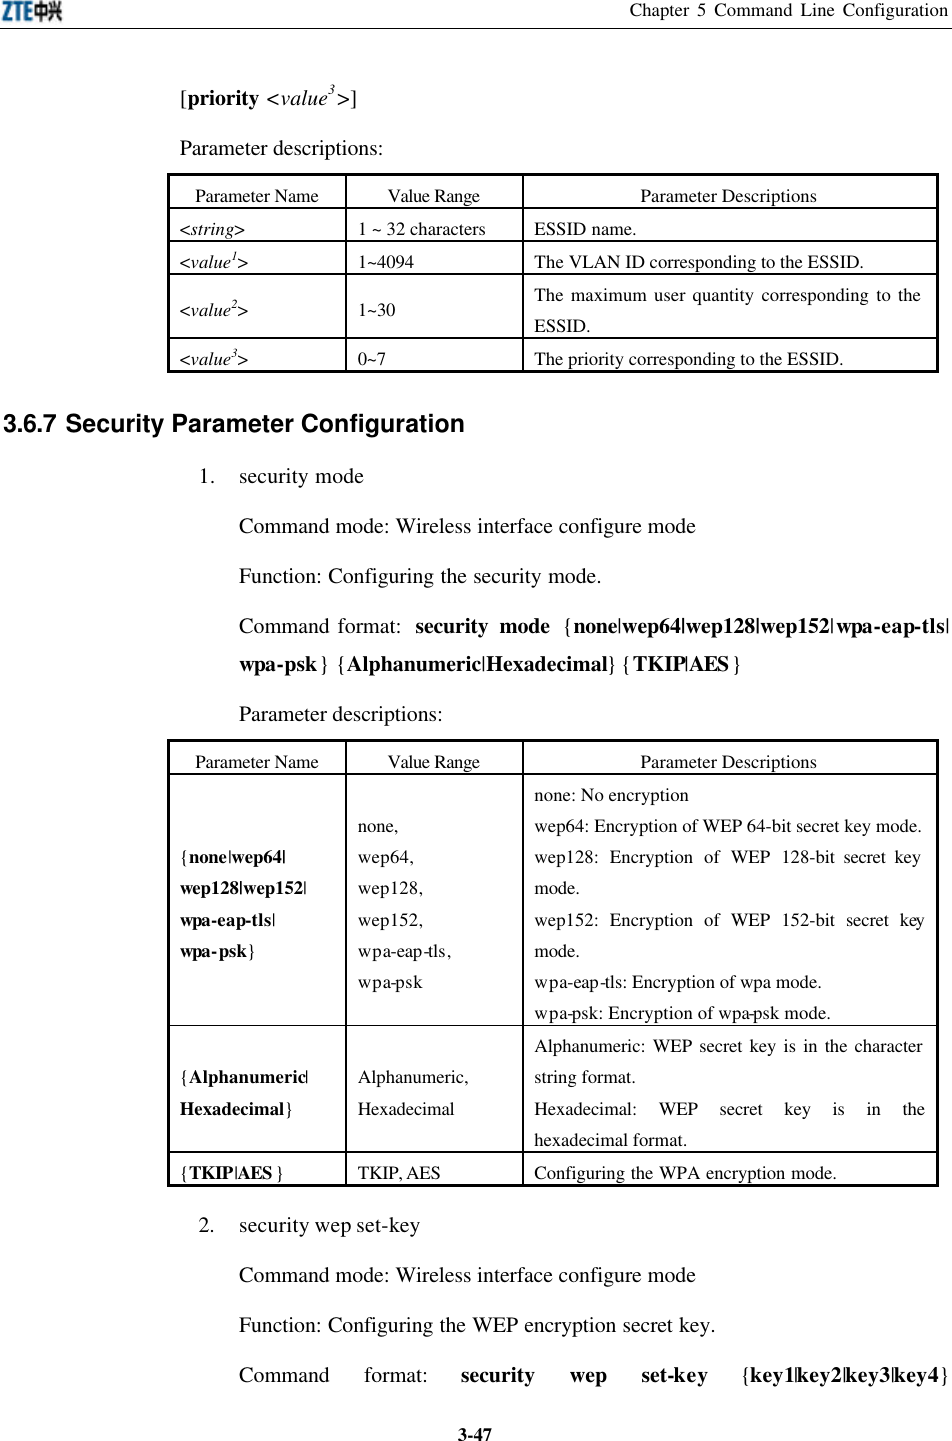 Chapter 5 Command Line Configuration  3-47[priority &lt;value3&gt;] Parameter descriptions:   Parameter Name Value Range Parameter Descriptions &lt;string&gt; 1 ~ 32 characters ESSID name.  &lt;value1&gt; 1~4094 The VLAN ID corresponding to the ESSID.   &lt;value2&gt; 1~30 The maximum user quantity corresponding to the ESSID.   &lt;value3&gt; 0~7 The priority corresponding to the ESSID.   3.6.7 Security Parameter Configuration  1. security mode Command mode: Wireless interface configure mode   Function: Configuring the security mode. Command format:  security mode {none|wep64|wep128|wep152|wpa-eap-tls| wpa-psk} {Alphanumeric|Hexadecimal} {TKIP|AES} Parameter descriptions:   Parameter Name Value Range Parameter Descriptions {none|wep64| wep128|wep152| wpa-eap-tls| wpa-psk} none,   wep64,   wep128,   wep152,   wpa-eap-tls,   wpa-psk none: No encryption wep64: Encryption of WEP 64-bit secret key mode.  wep128: Encryption of WEP 128-bit secret key mode.   wep152: Encryption of WEP 152-bit secret key mode.   wpa-eap-tls: Encryption of wpa mode.   wpa-psk: Encryption of wpa-psk mode.   {Alphanumeric| Hexadecimal} Alphanumeric,   Hexadecimal Alphanumeric: WEP secret key is in the character string format.   Hexadecimal: WEP secret key is in the hexadecimal format.   {TKIP|AES } TKIP, AES Configuring the WPA encryption mode.   2. security wep set-key Command mode: Wireless interface configure mode   Function: Configuring the WEP encryption secret key.   Command format: security wep set-key {key1|key2|key3|key4} 